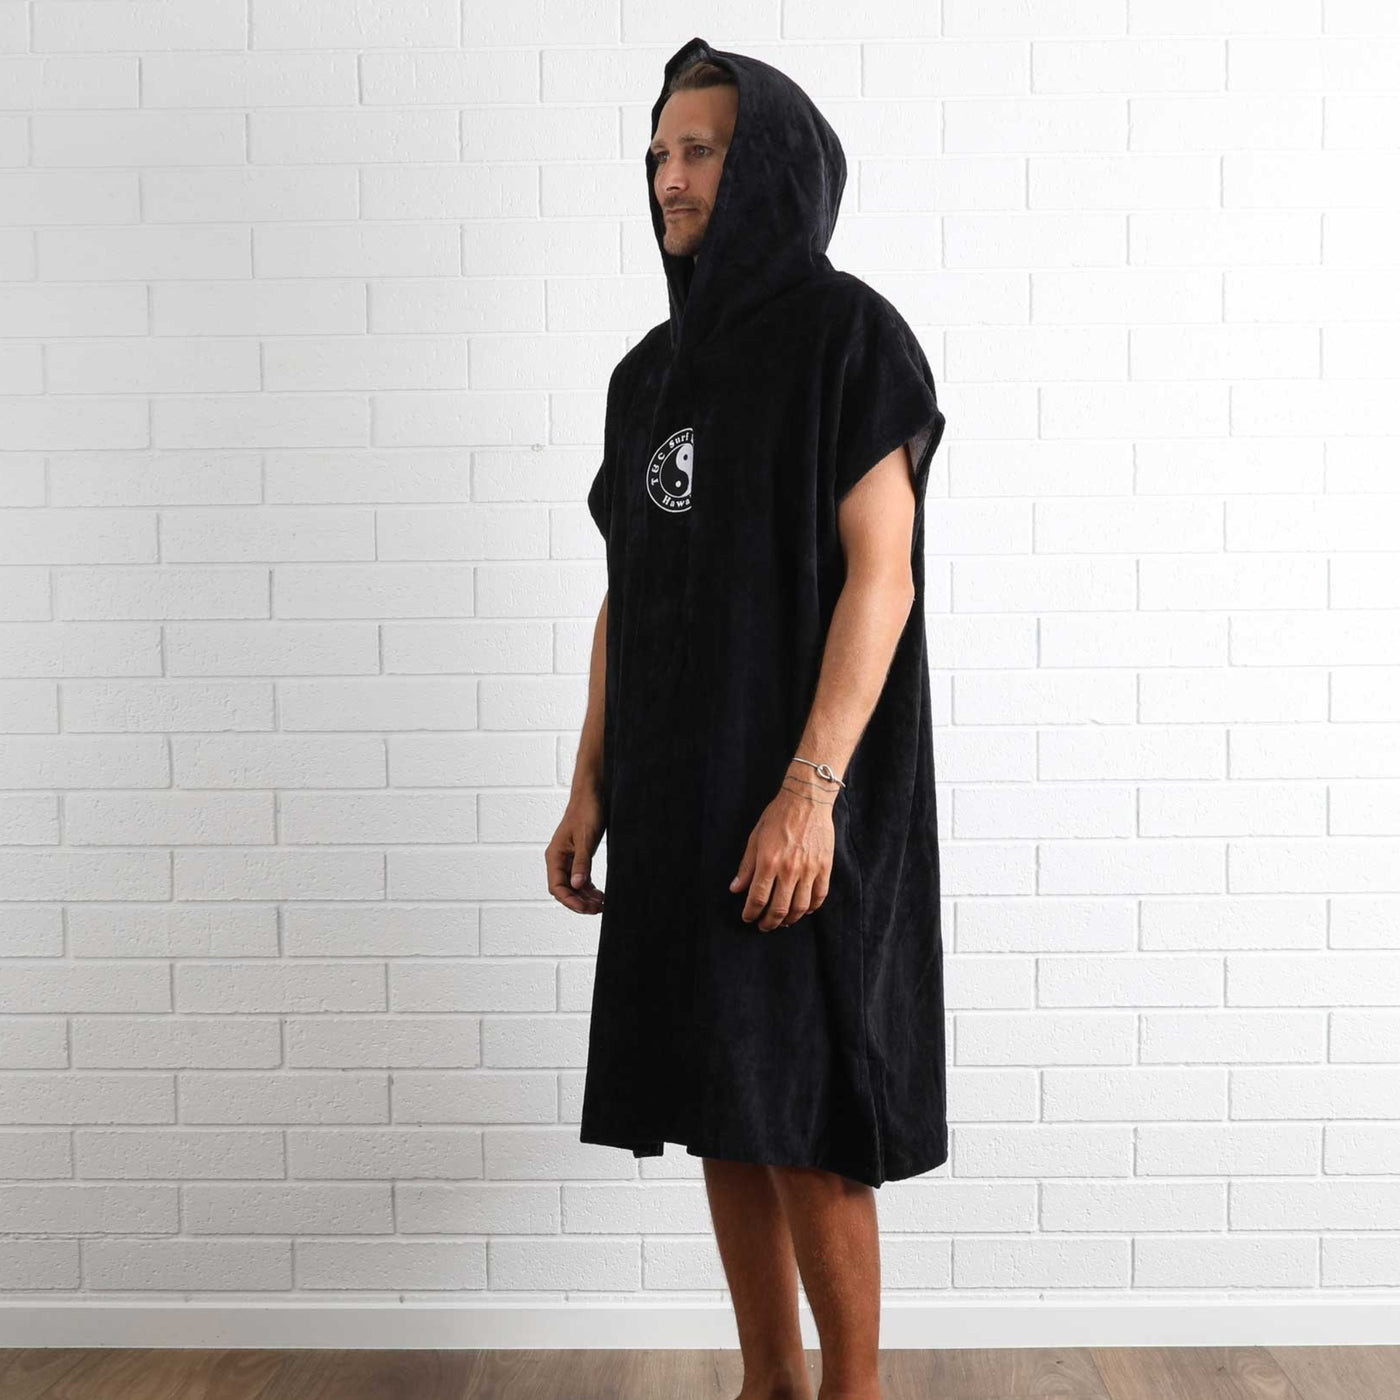 Yin Yang Hooded Towel - Black